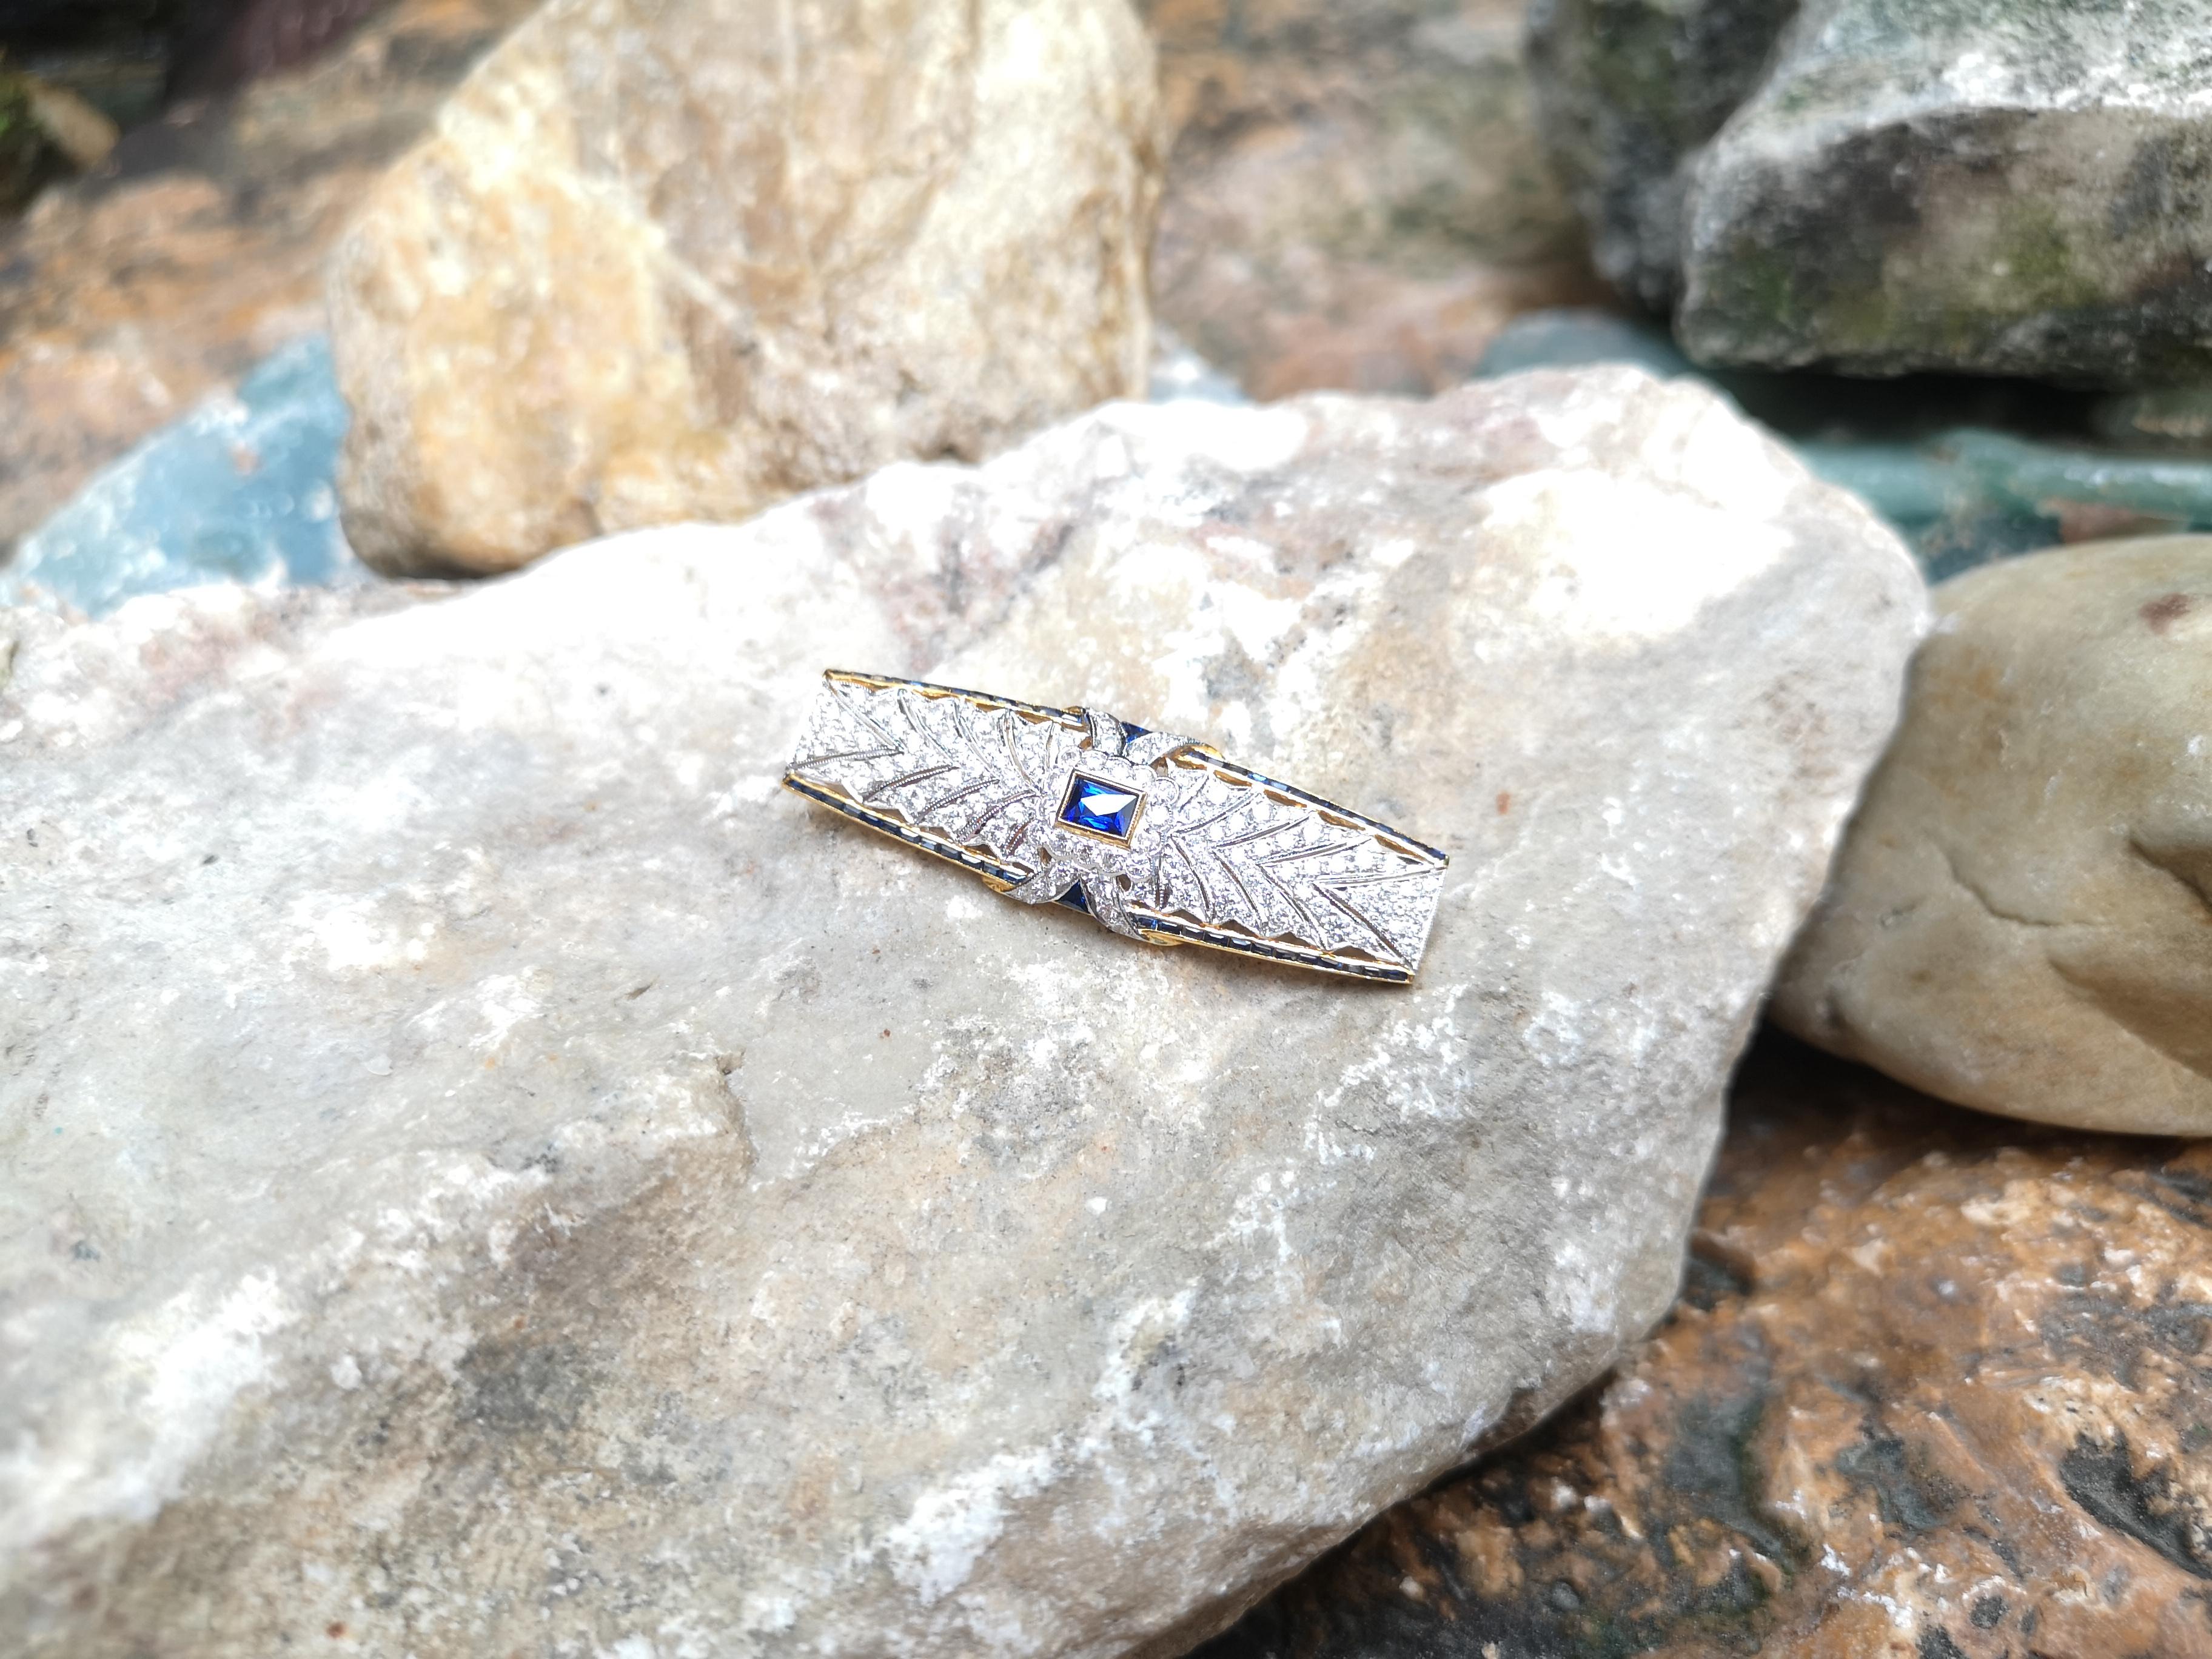 Blue Sapphire 0.50 carat, Blue Sapphire 2.67 carats and Diamond 2.06 carats Brooch set in 18 Karat Gold Settings

Width:  5.2 cm 
Length: 1.8 cm
Total Weight: 10.25 grams

